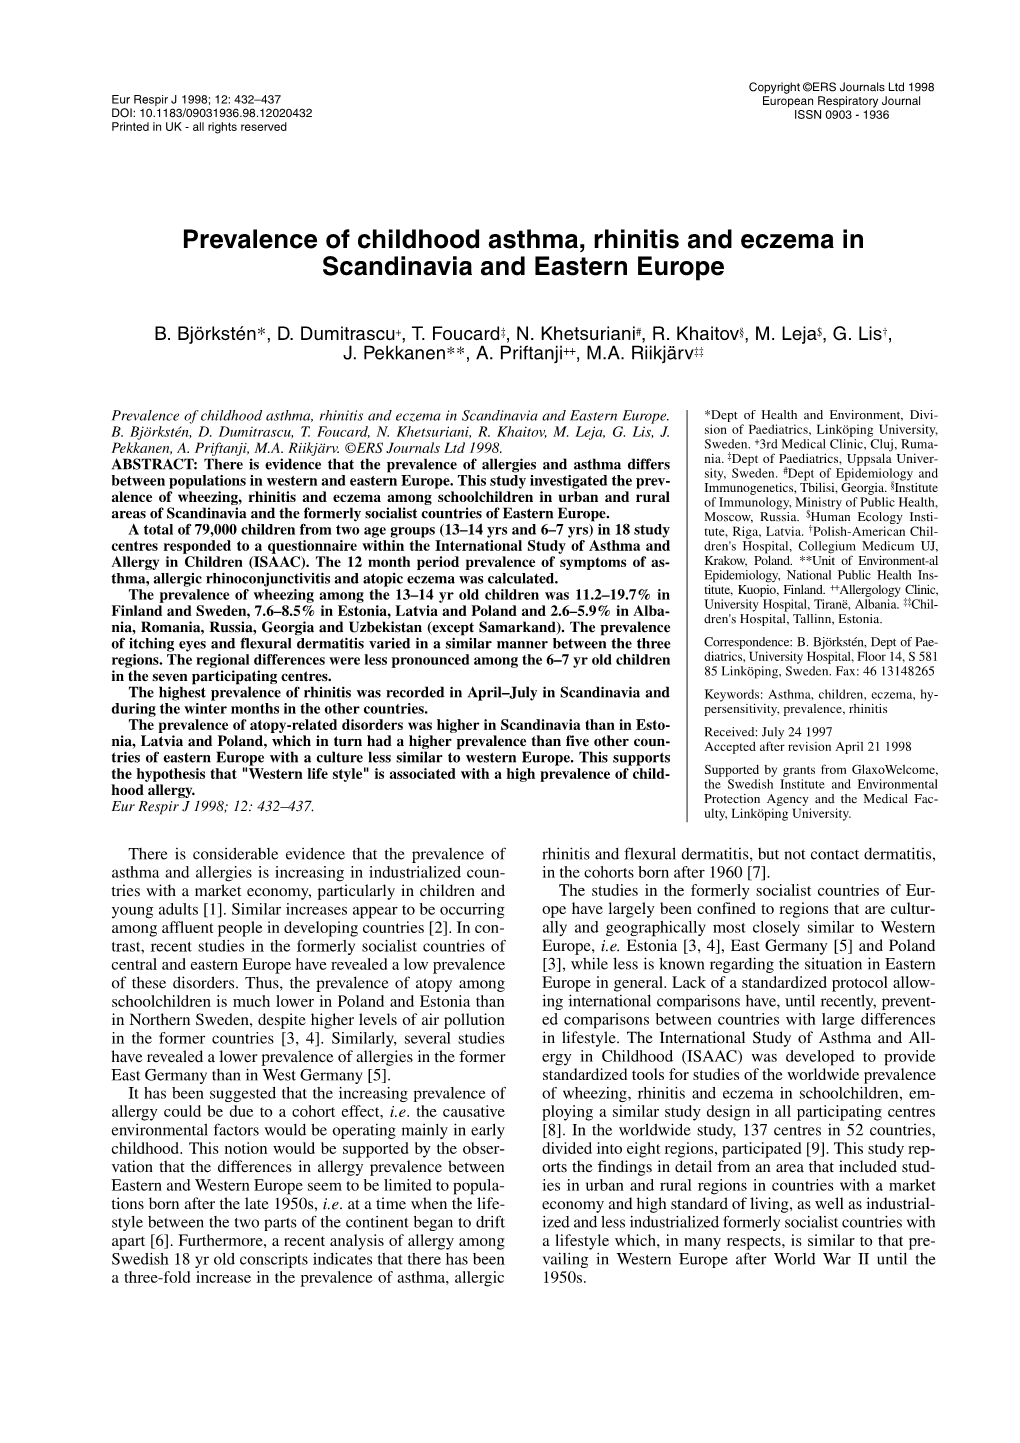 Prevalence of Childhood Asthma, Rhinitis and Eczema in Scandinavia and Eastern Europe